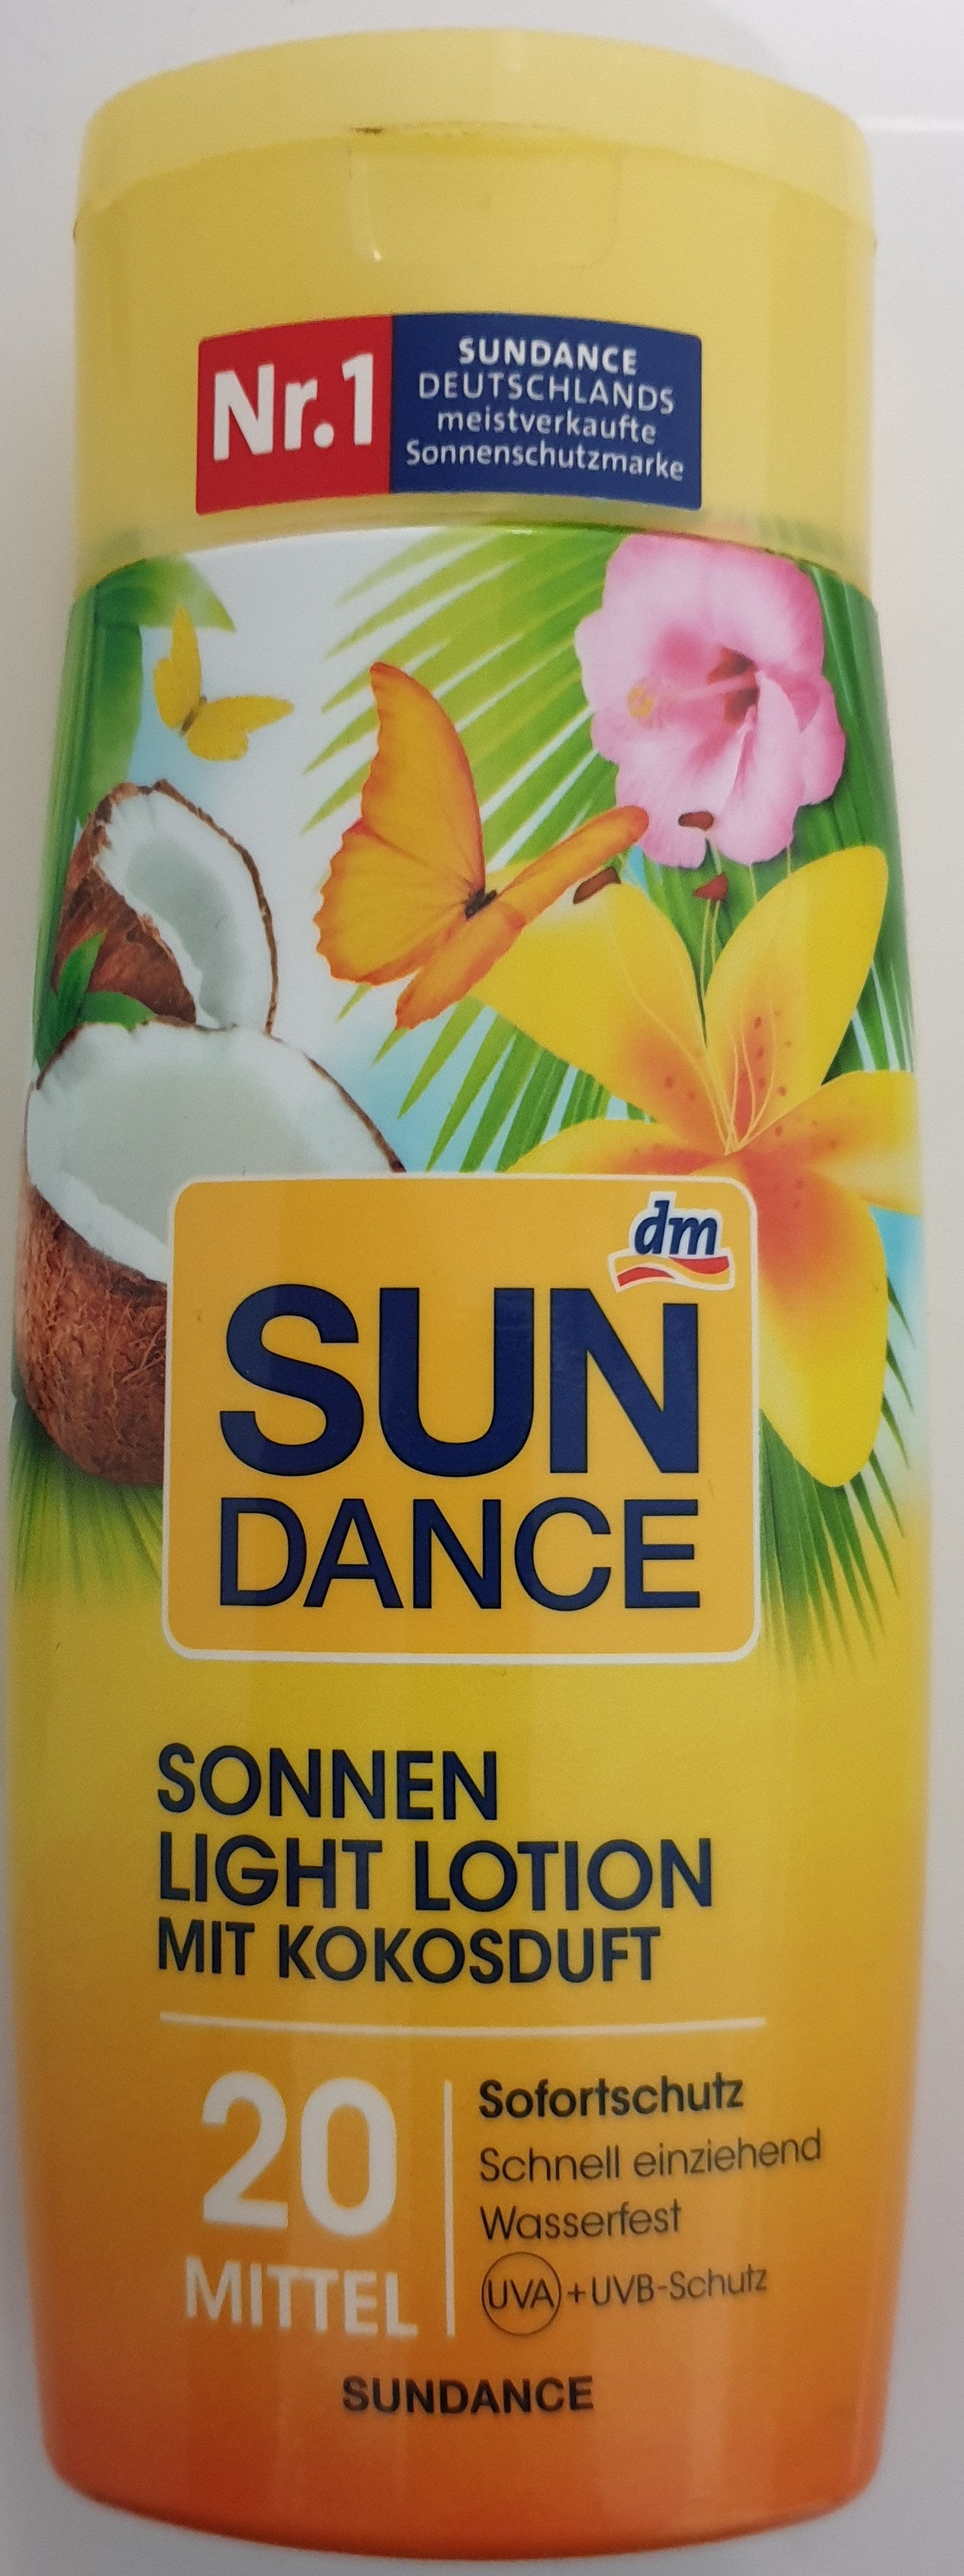 Sonnen light Lotion mit Kokosduft 20 mittel - Produkt - de